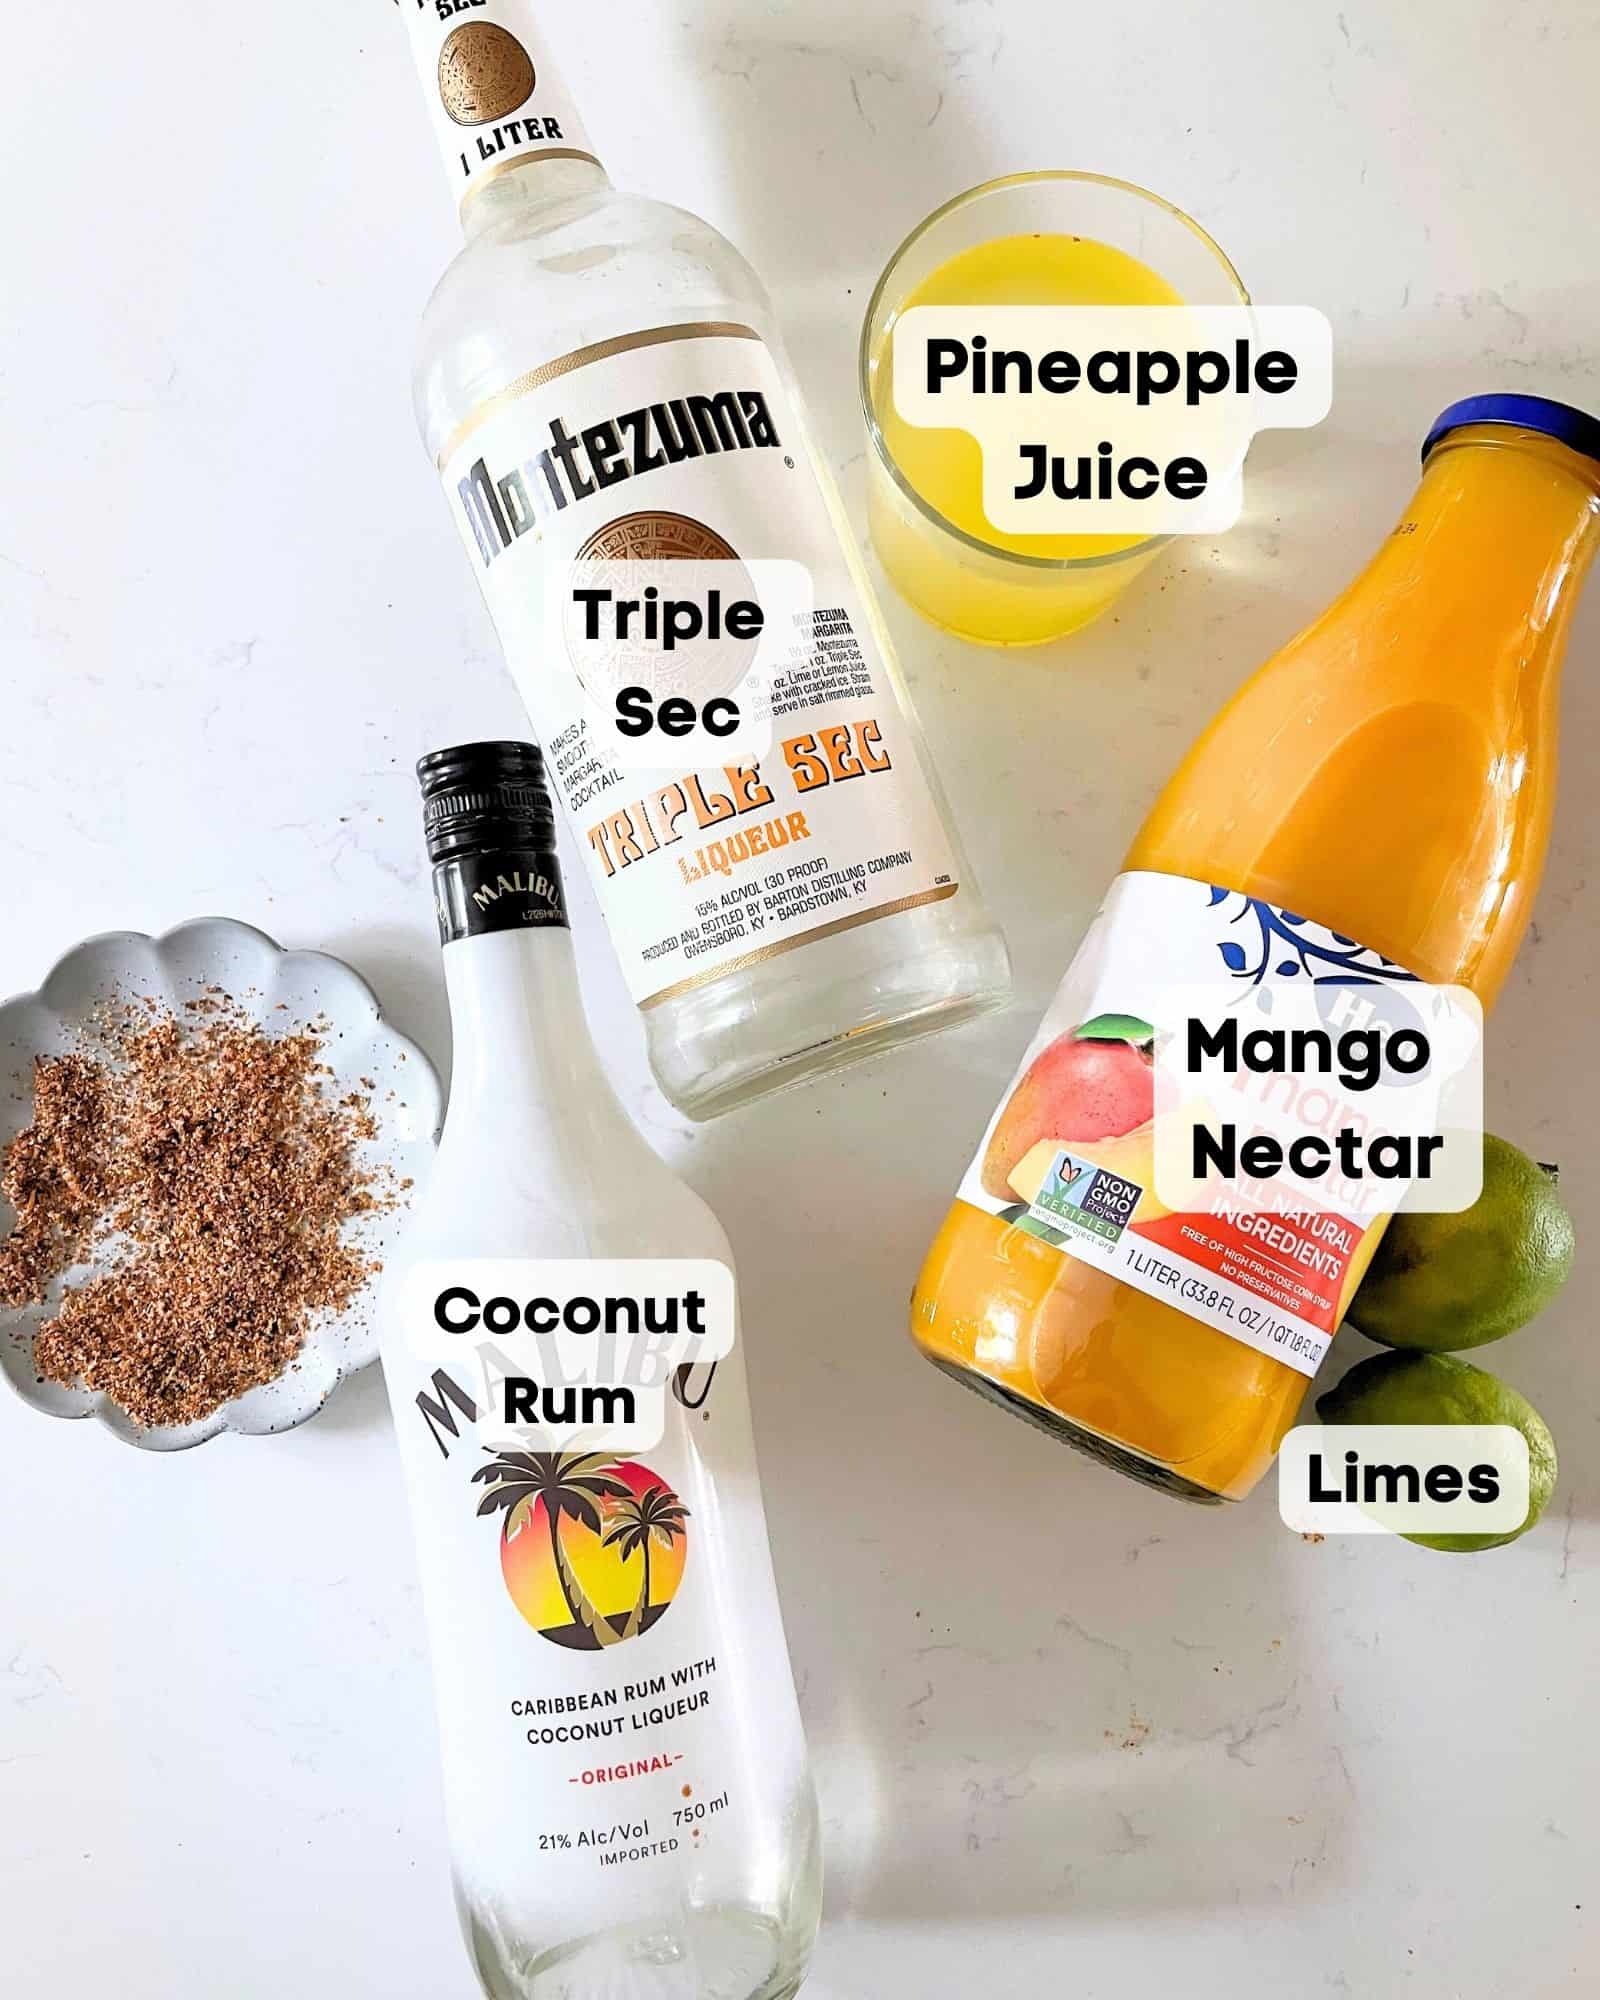 ingredients to make a mango tango - mango nectar, triple sec, coconut rum, pineapple juice, and lime juice.